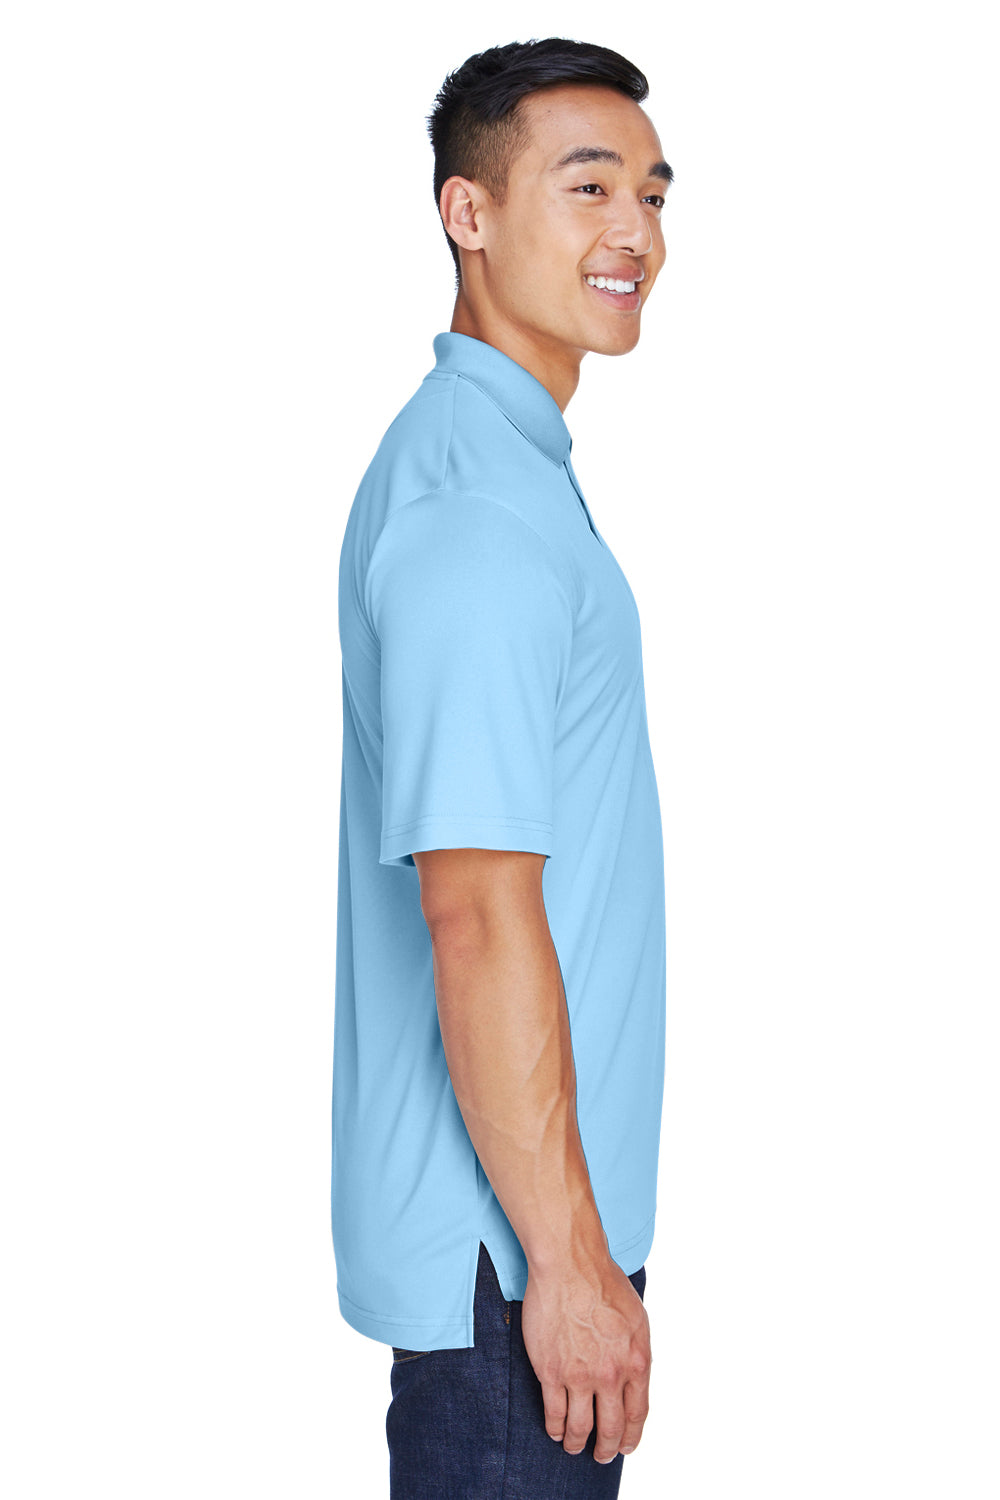 UltraClub 8405 Mens Cool & Dry Moisture Wicking Short Sleeve Polo Shirt Columbia Blue Side